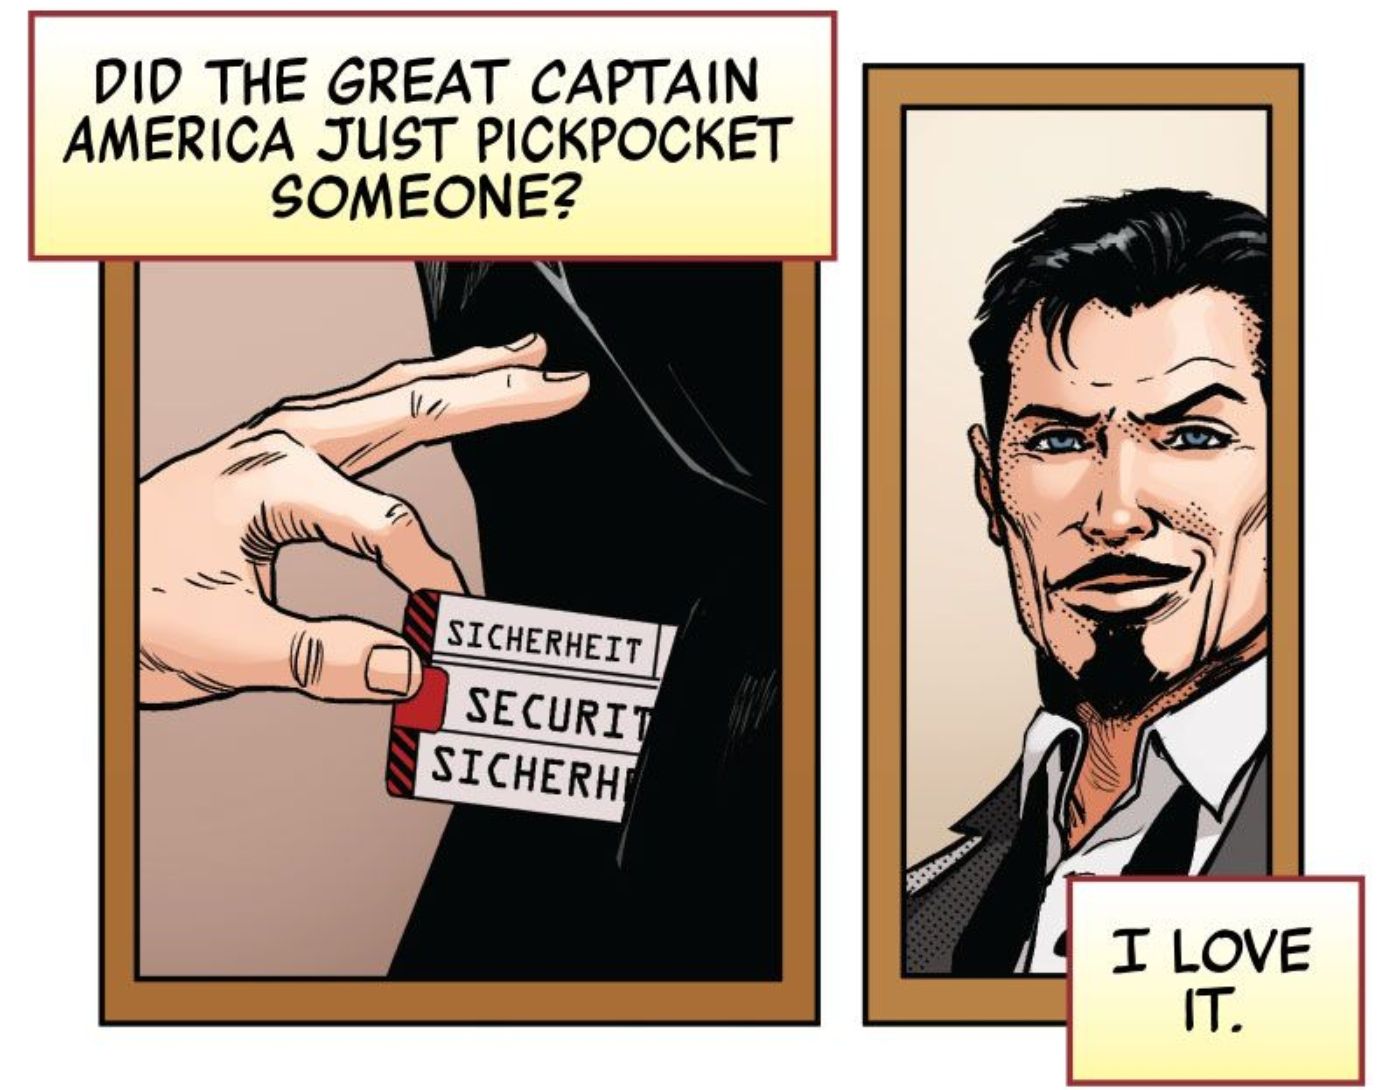 Tony Stark watching Captain America pickpocket someone to obtain information.